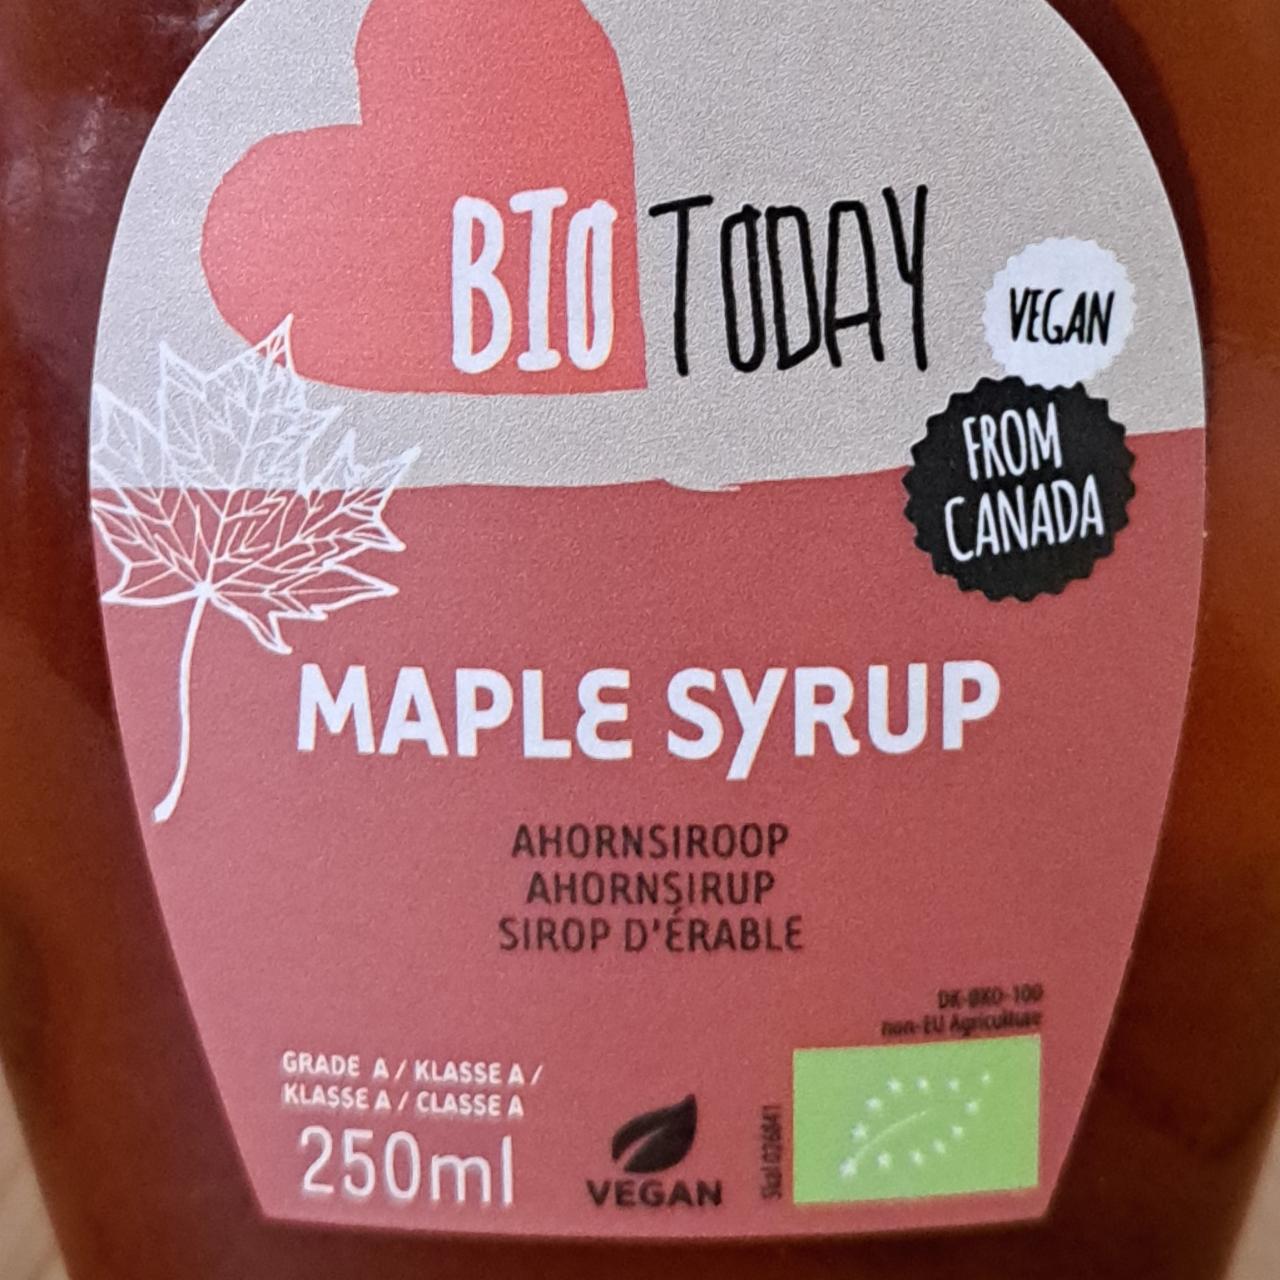 Fotografie - Maple syrup Bio Today